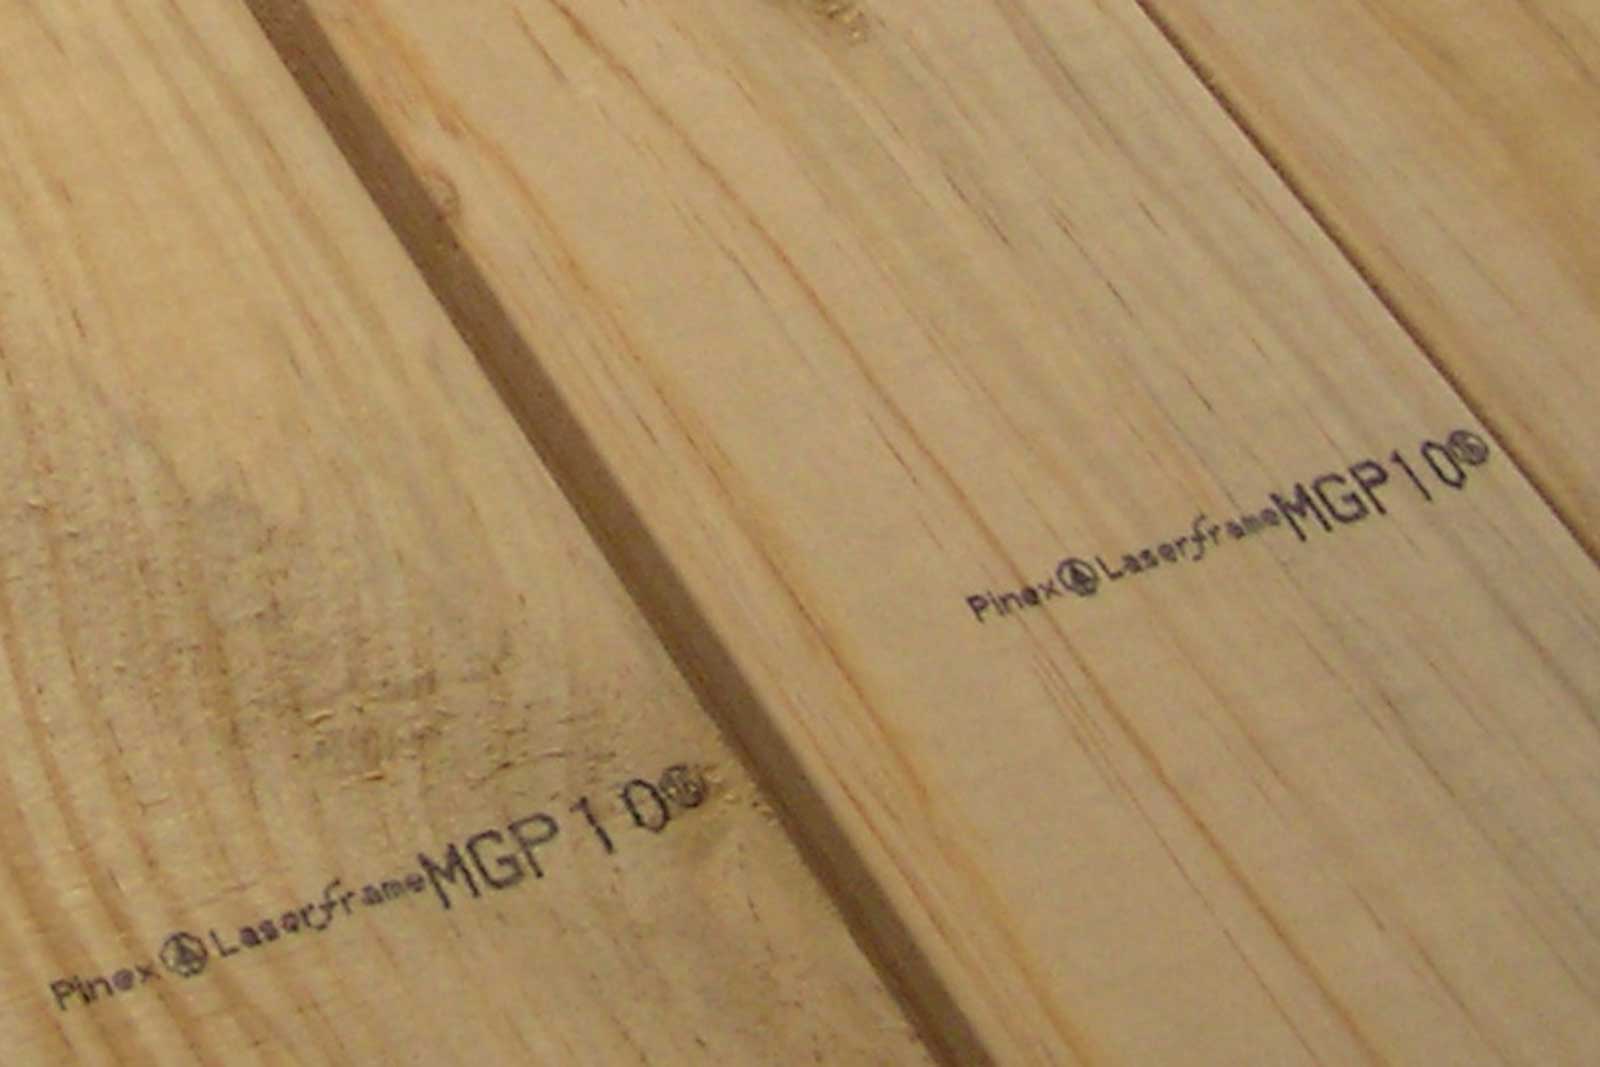 Euromps - stampa su tavole in legno